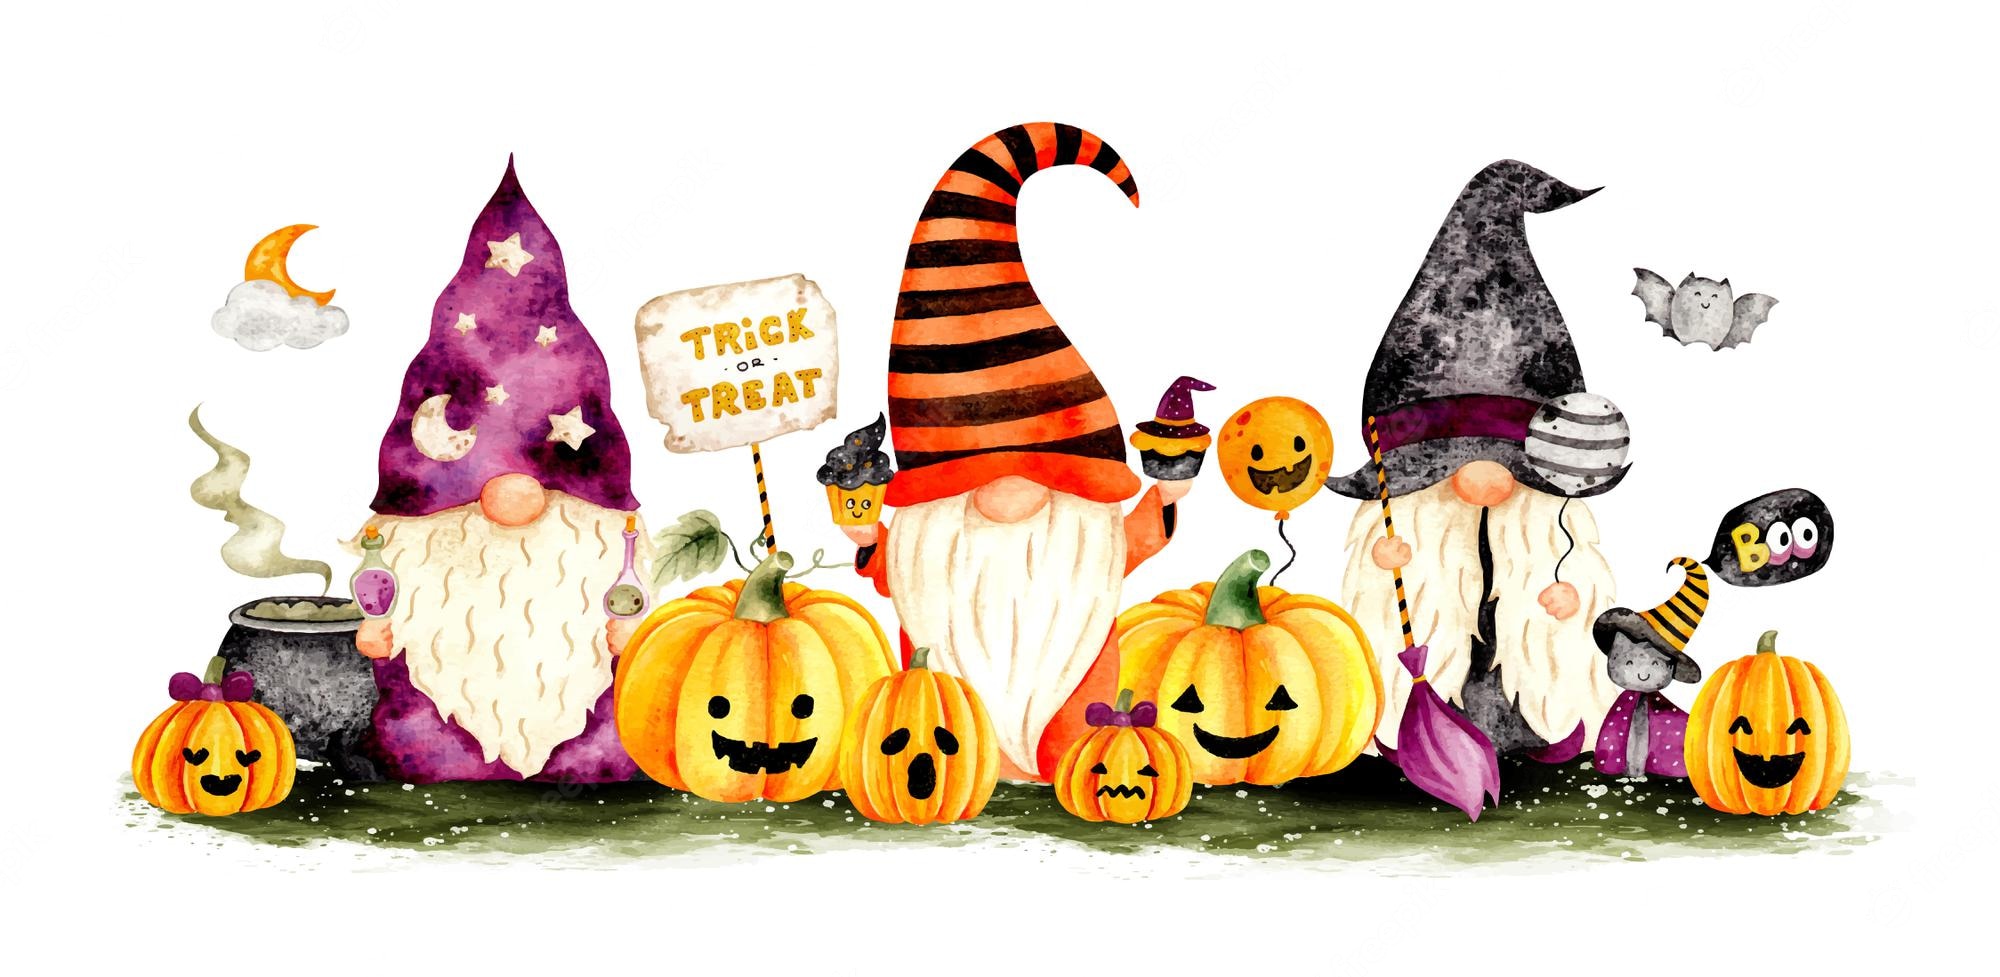 Watercolor halloween Image. Free Vectors, & PSD